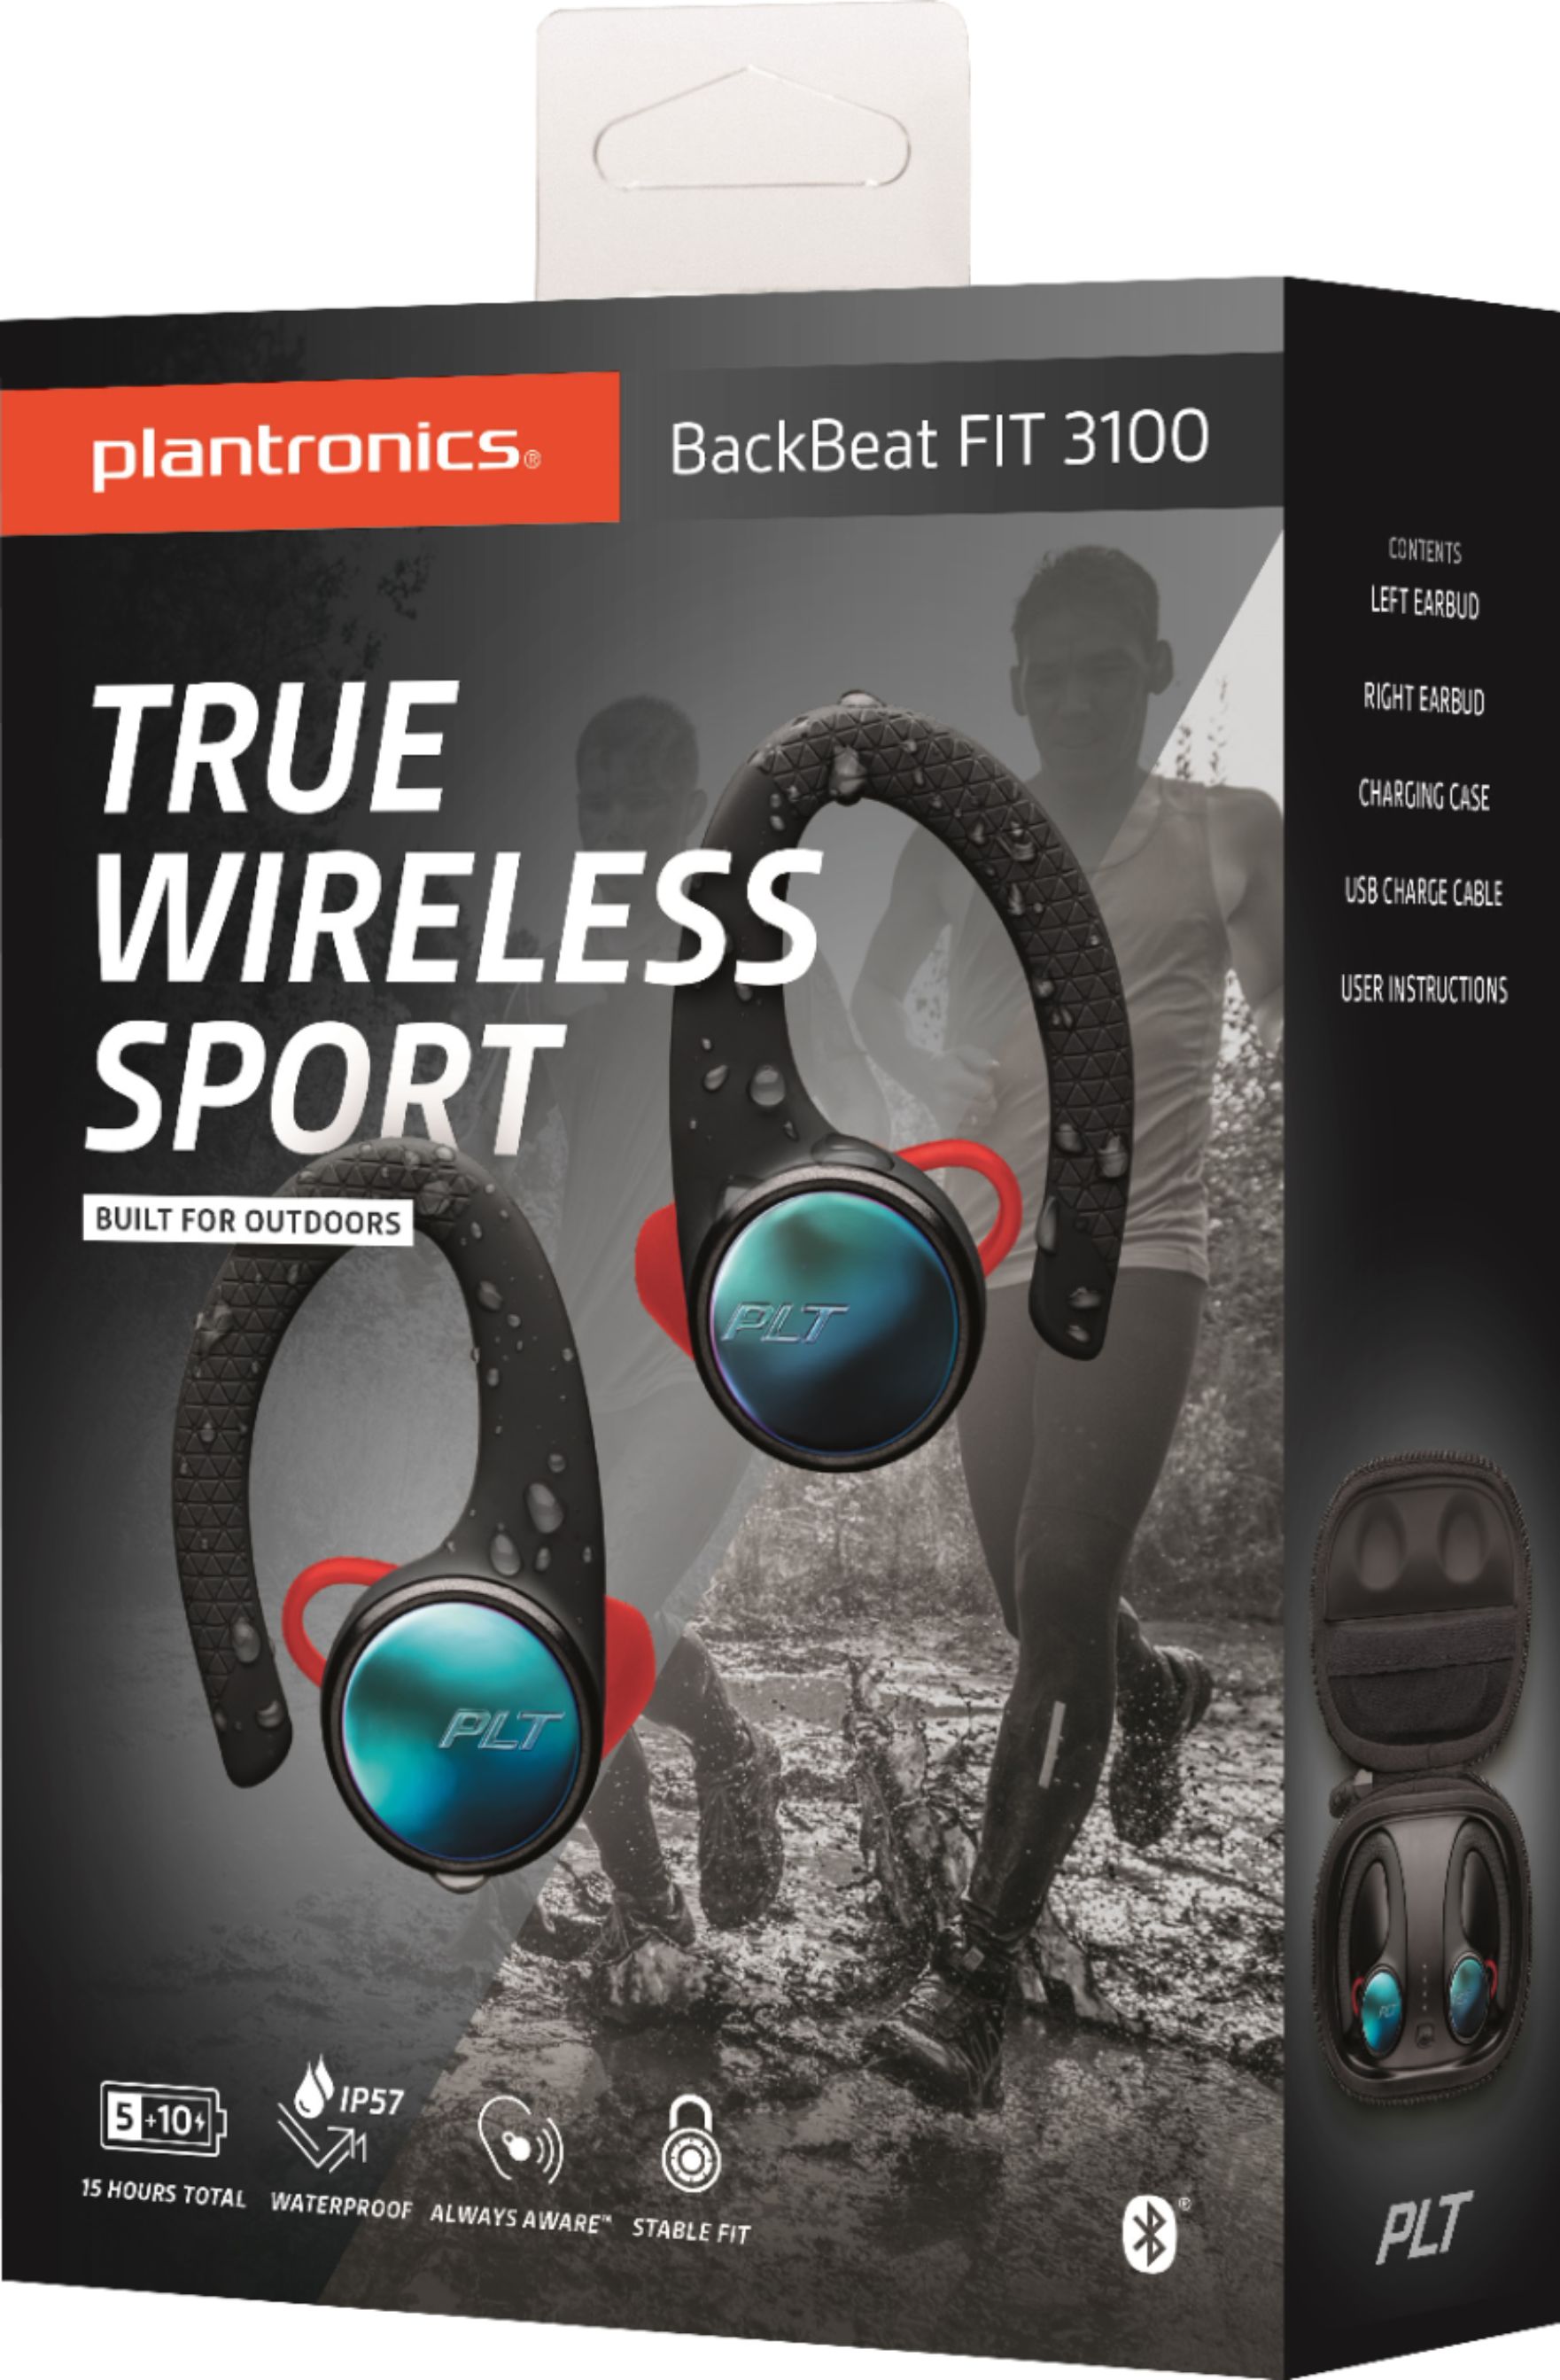 plantronics backbeat fit 3100 wireless bluetooth headphones